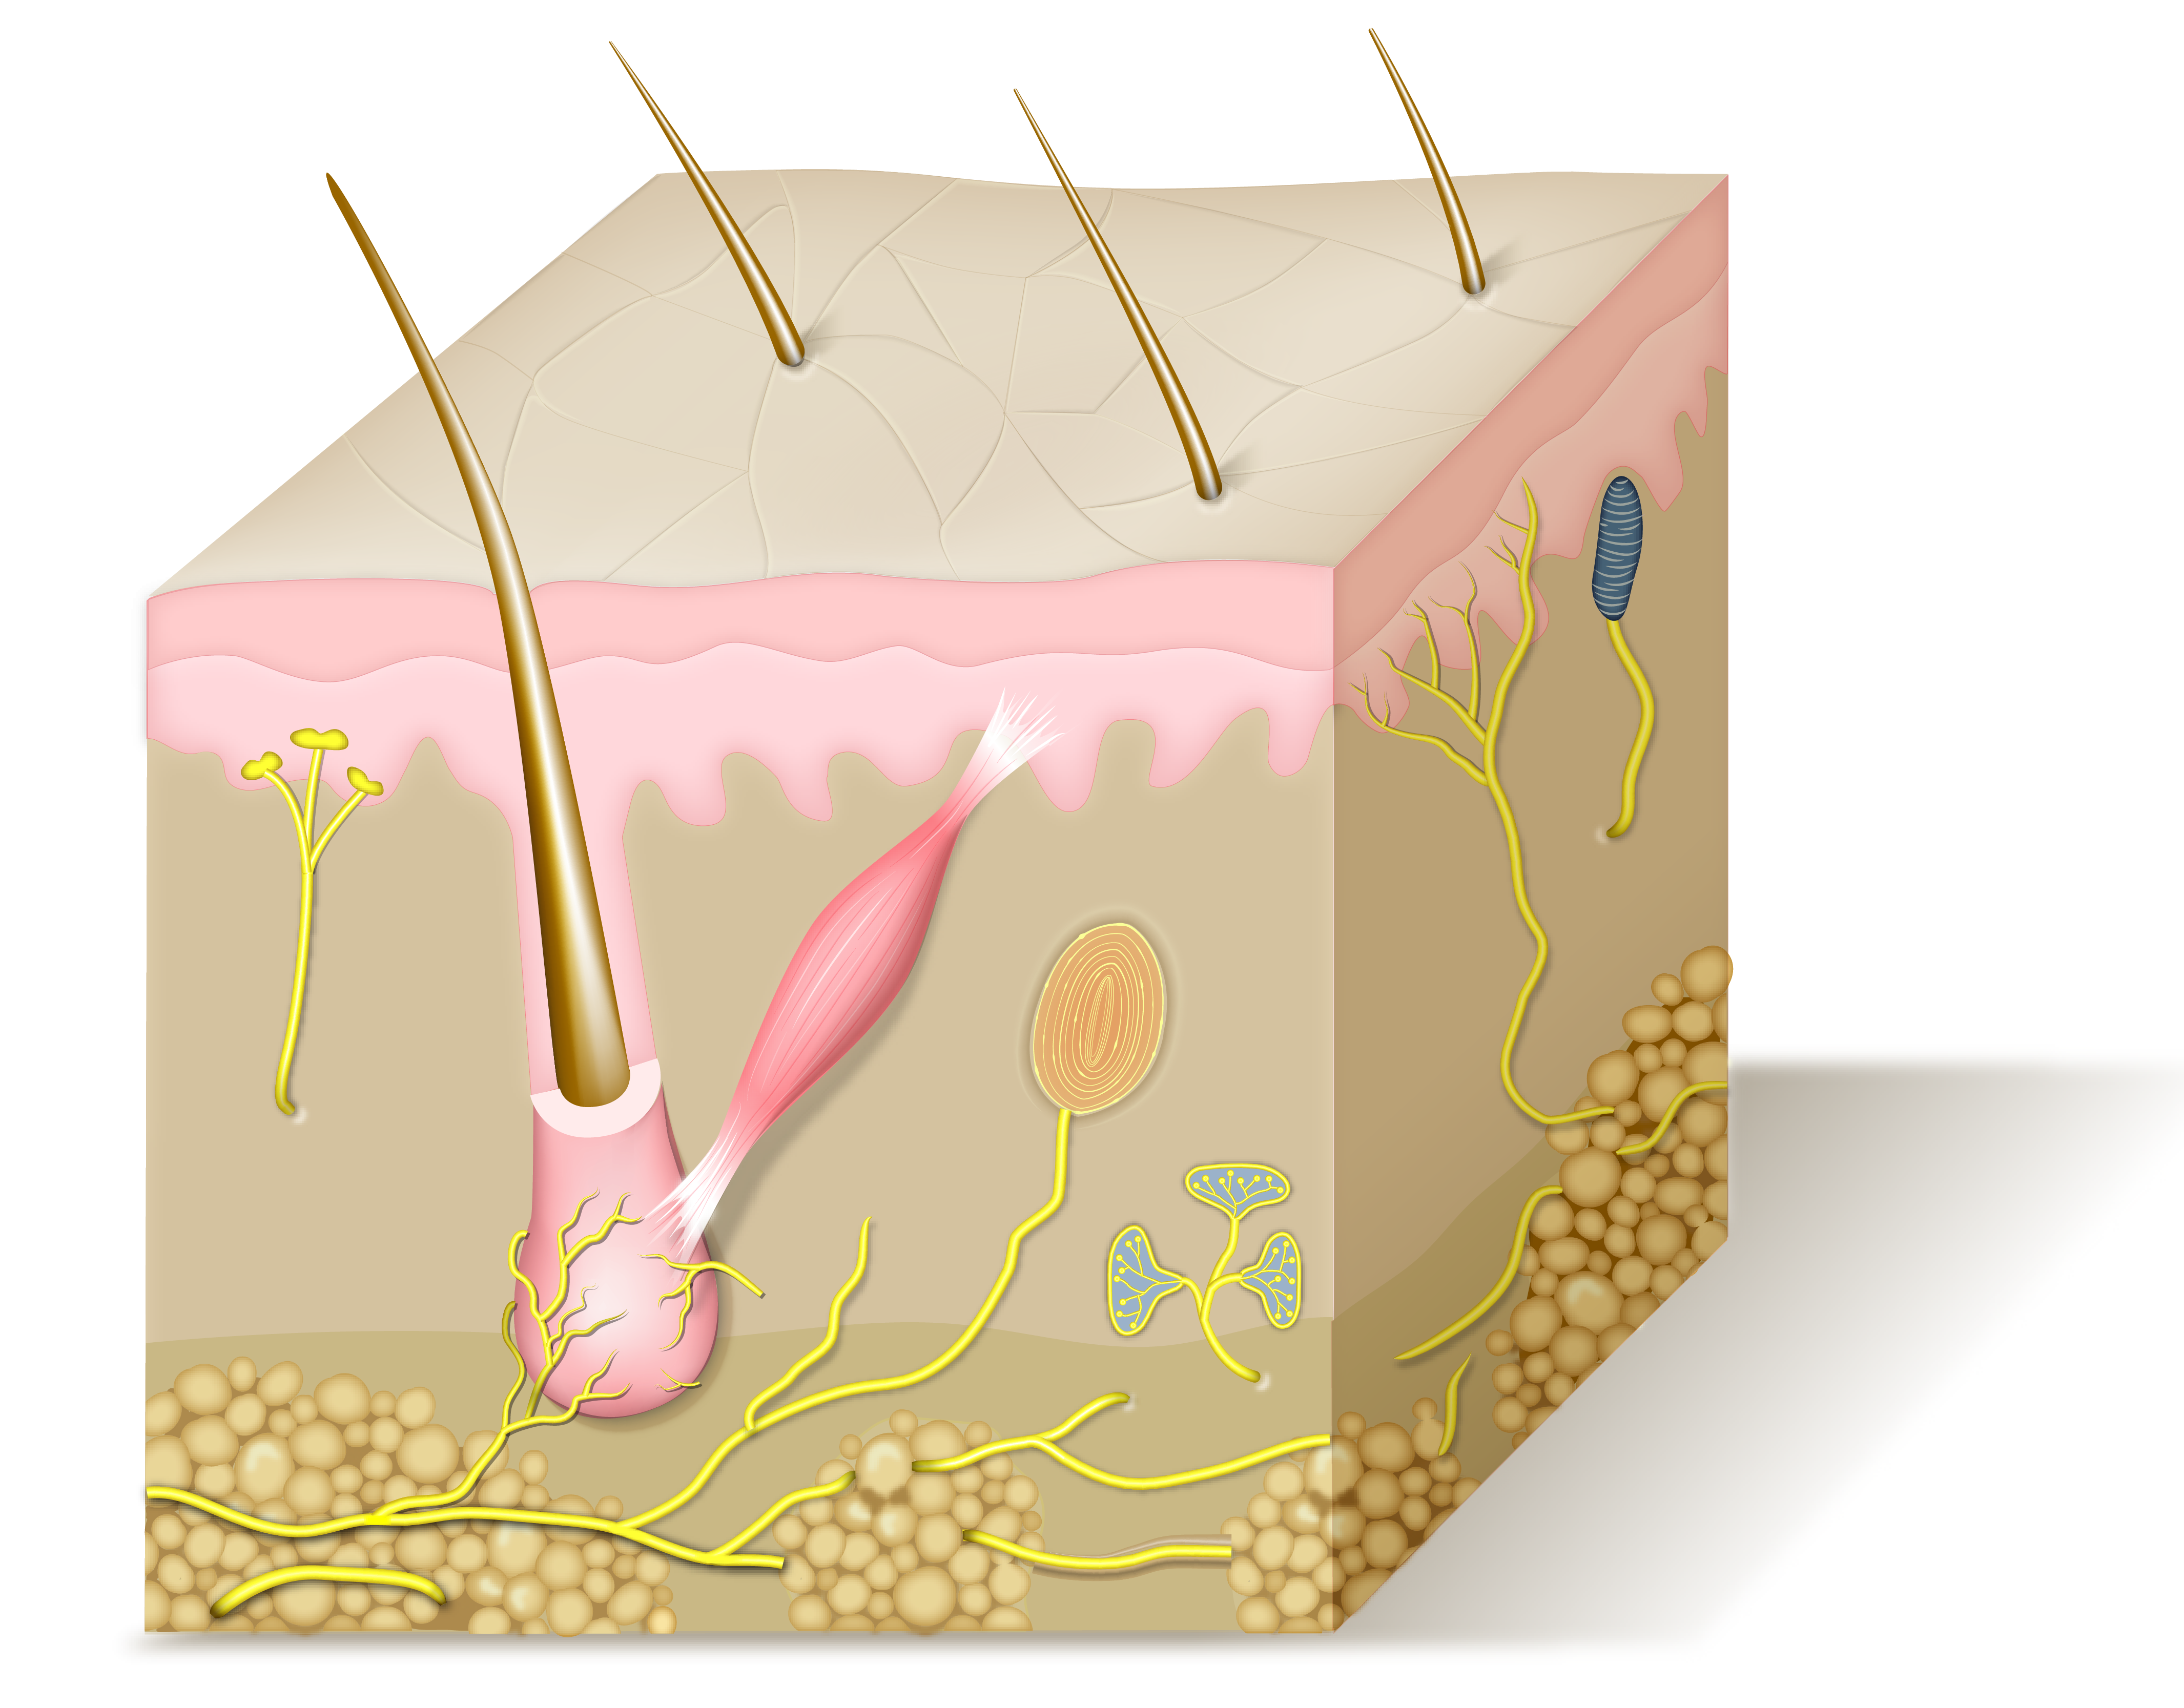 Skin clipart skin structure. Alexandra gordon medical illustration